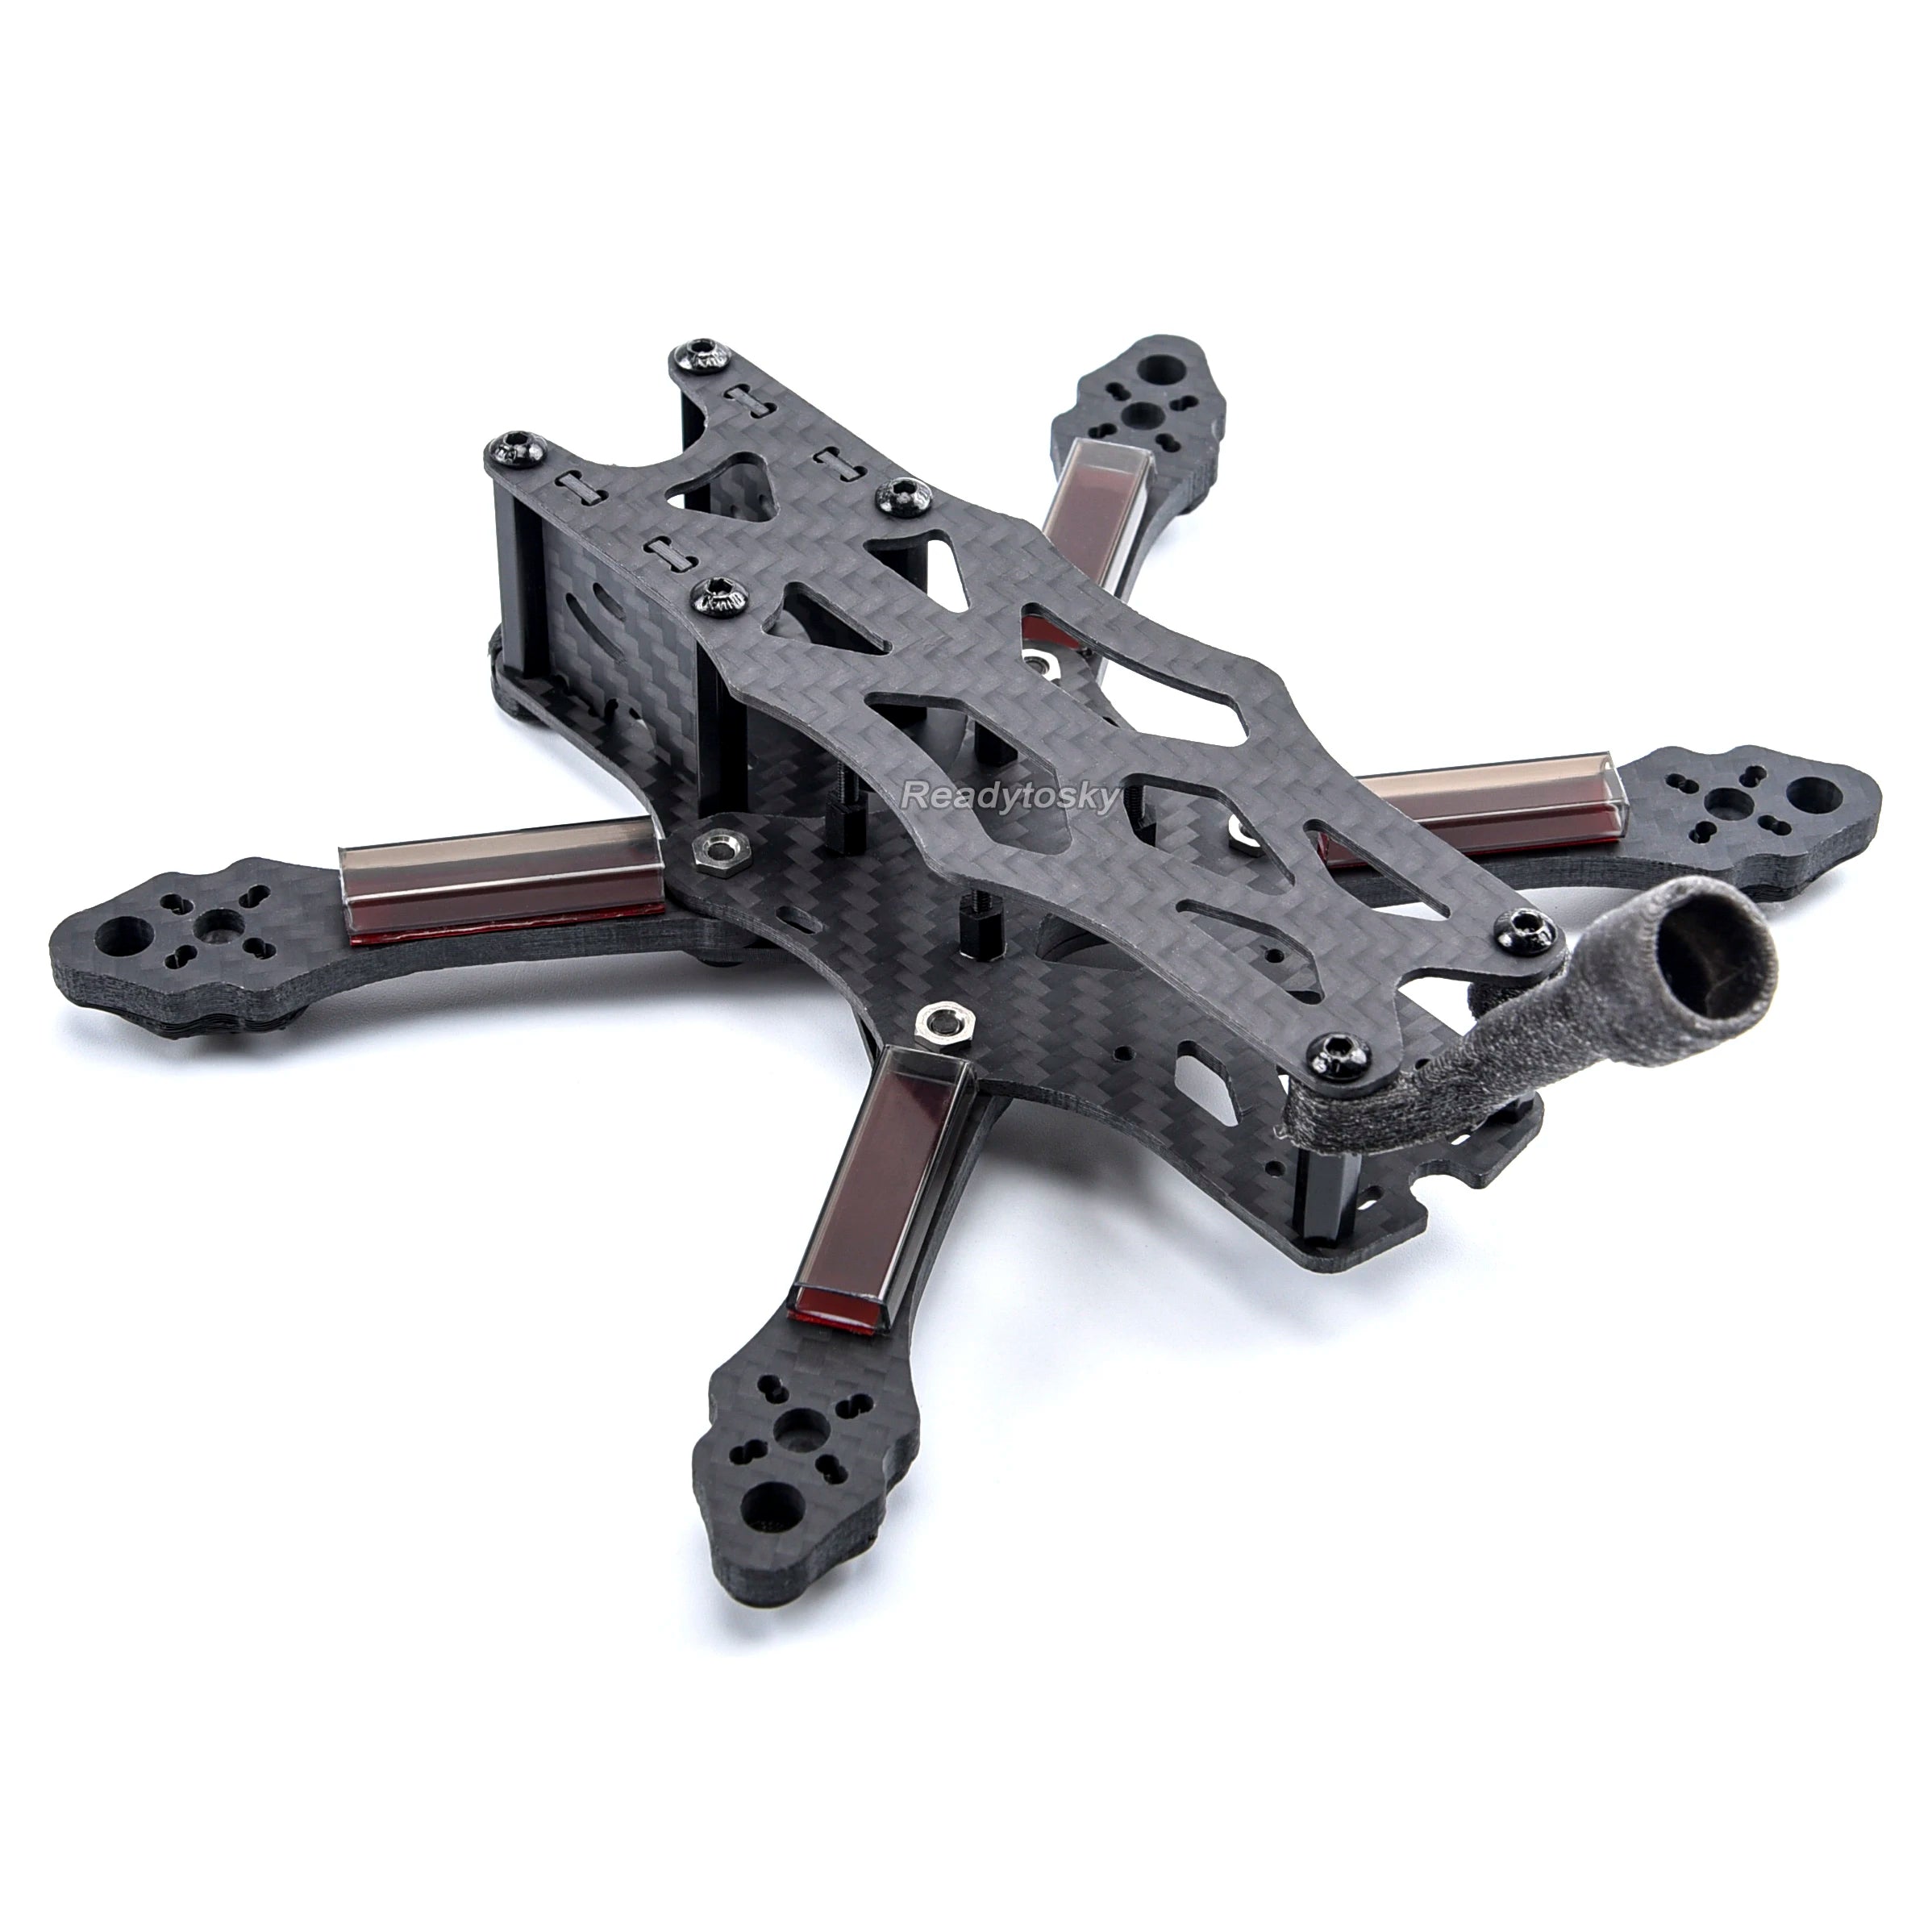 3inch Fiber Frame Kit, RC Parts & Accs : Carbon Fiber Quadcopter Frame Quantity